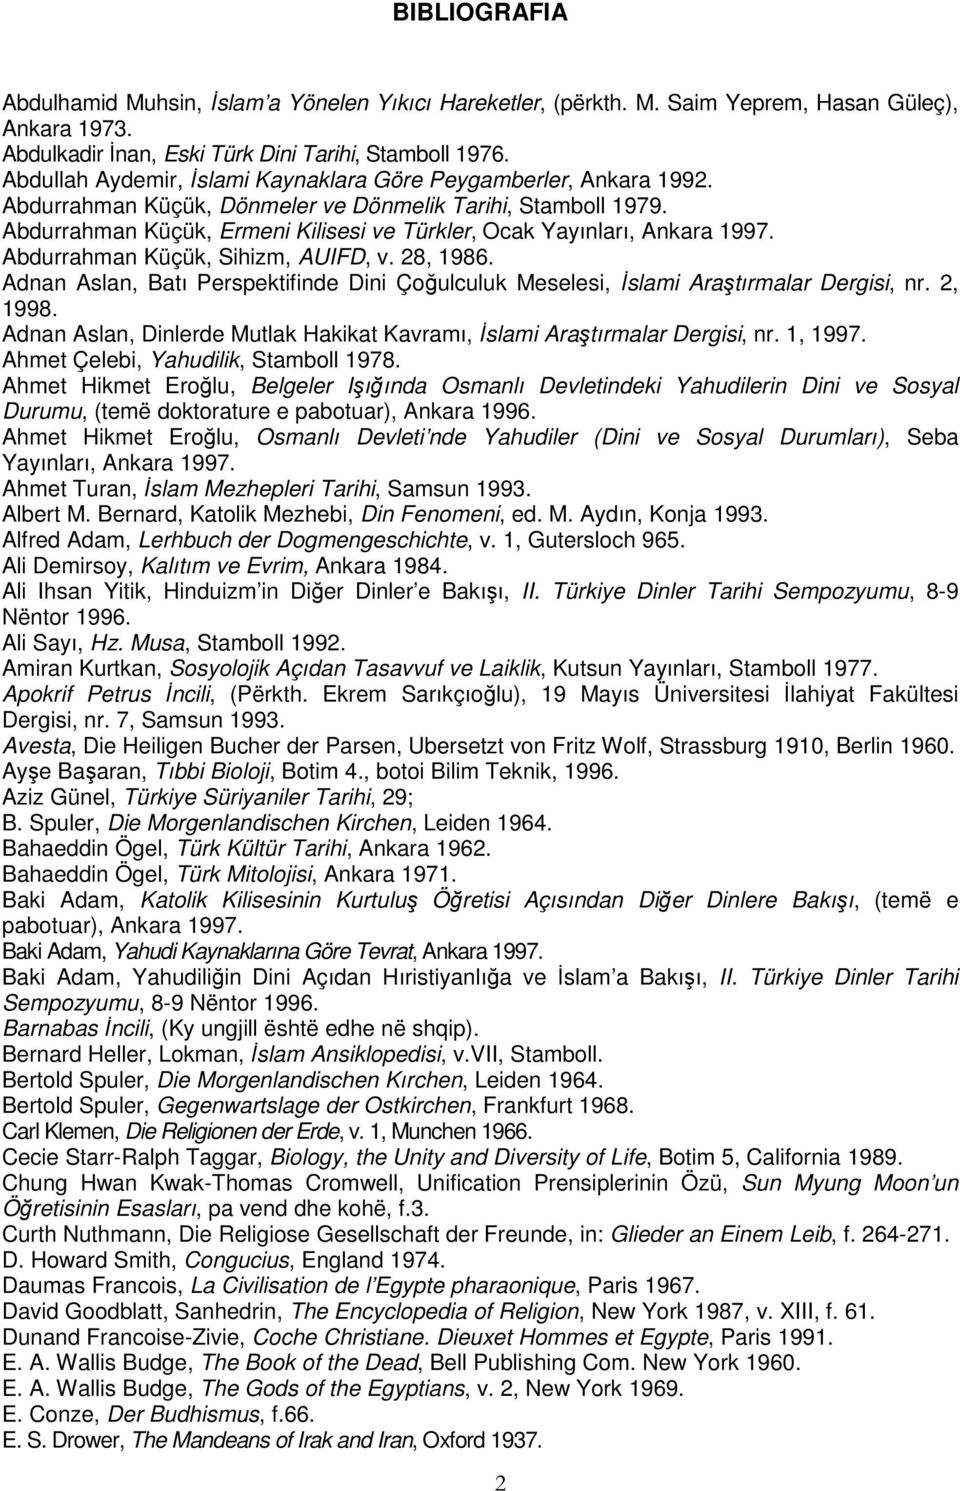 Abdurrahman Küçük, Ermeni Kilisesi ve Türkler, Ocak Yayınları, Ankara 1997. Abdurrahman Küçük, Sihizm, AUIFD, v. 28, 1986.